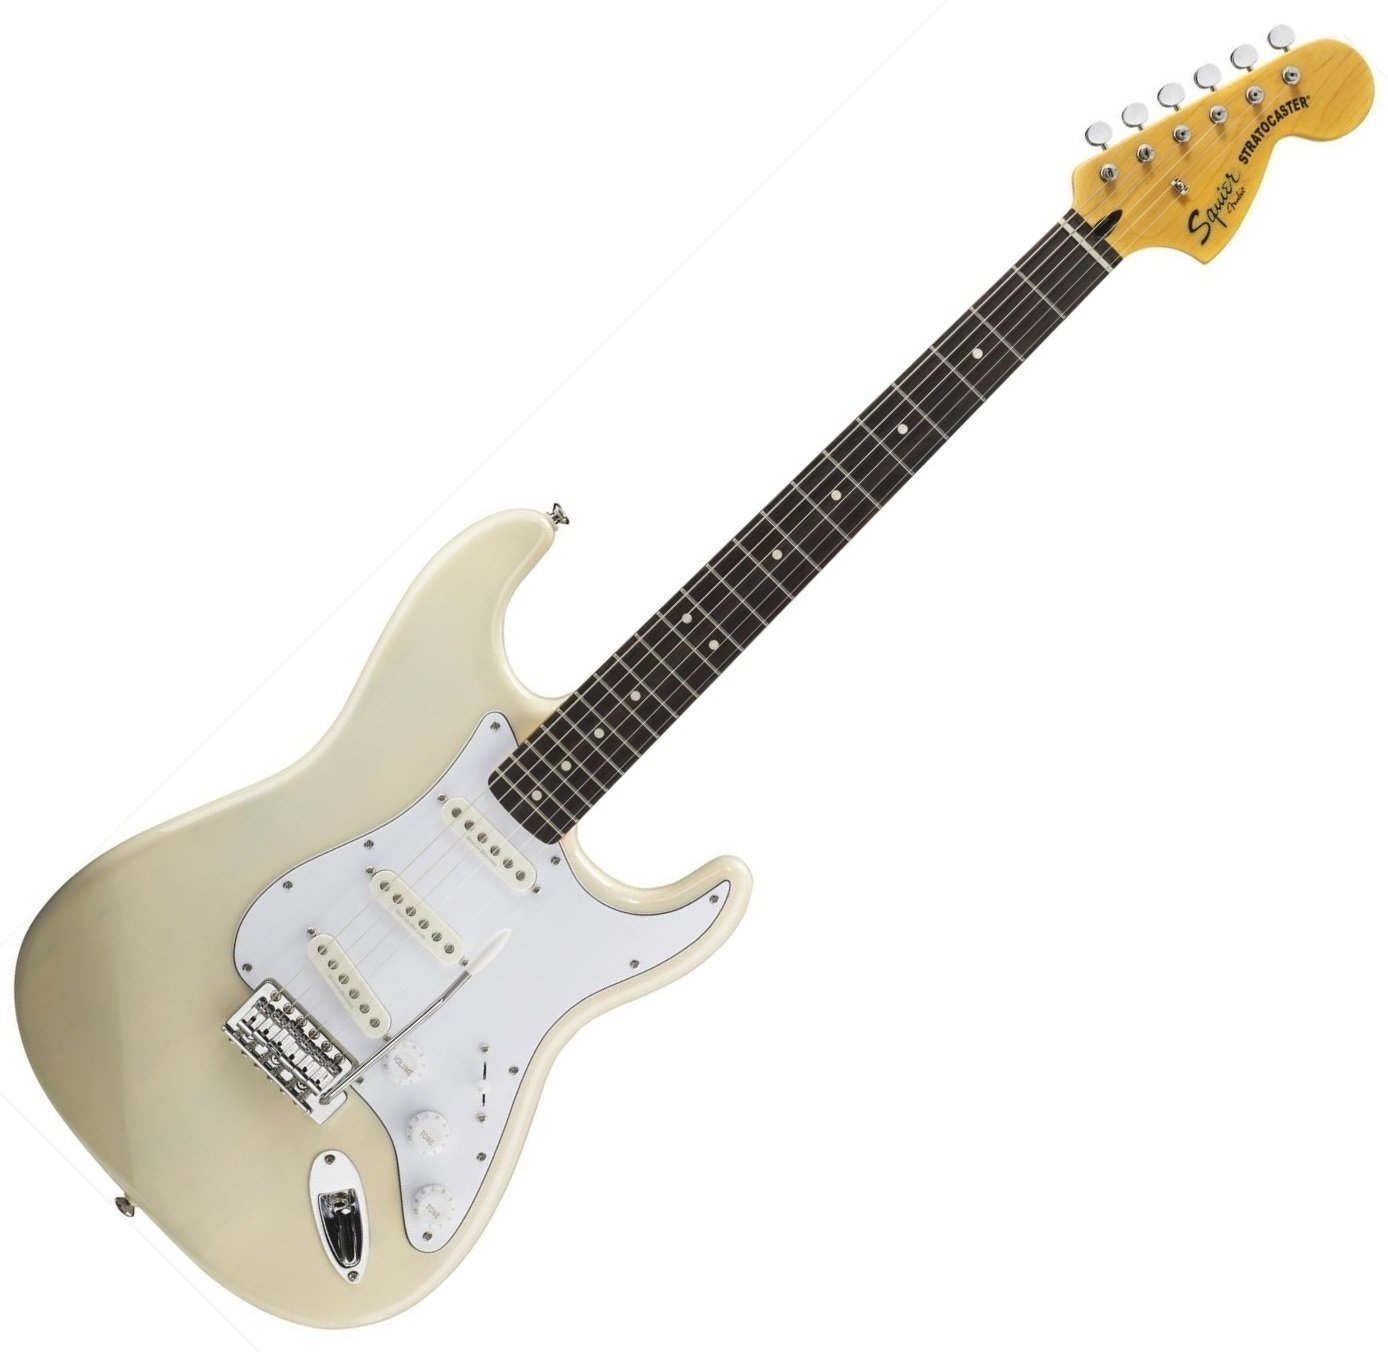 Sähkökitara Fender Squier Vintage Modified Stratocaster IL Vintage Blonde